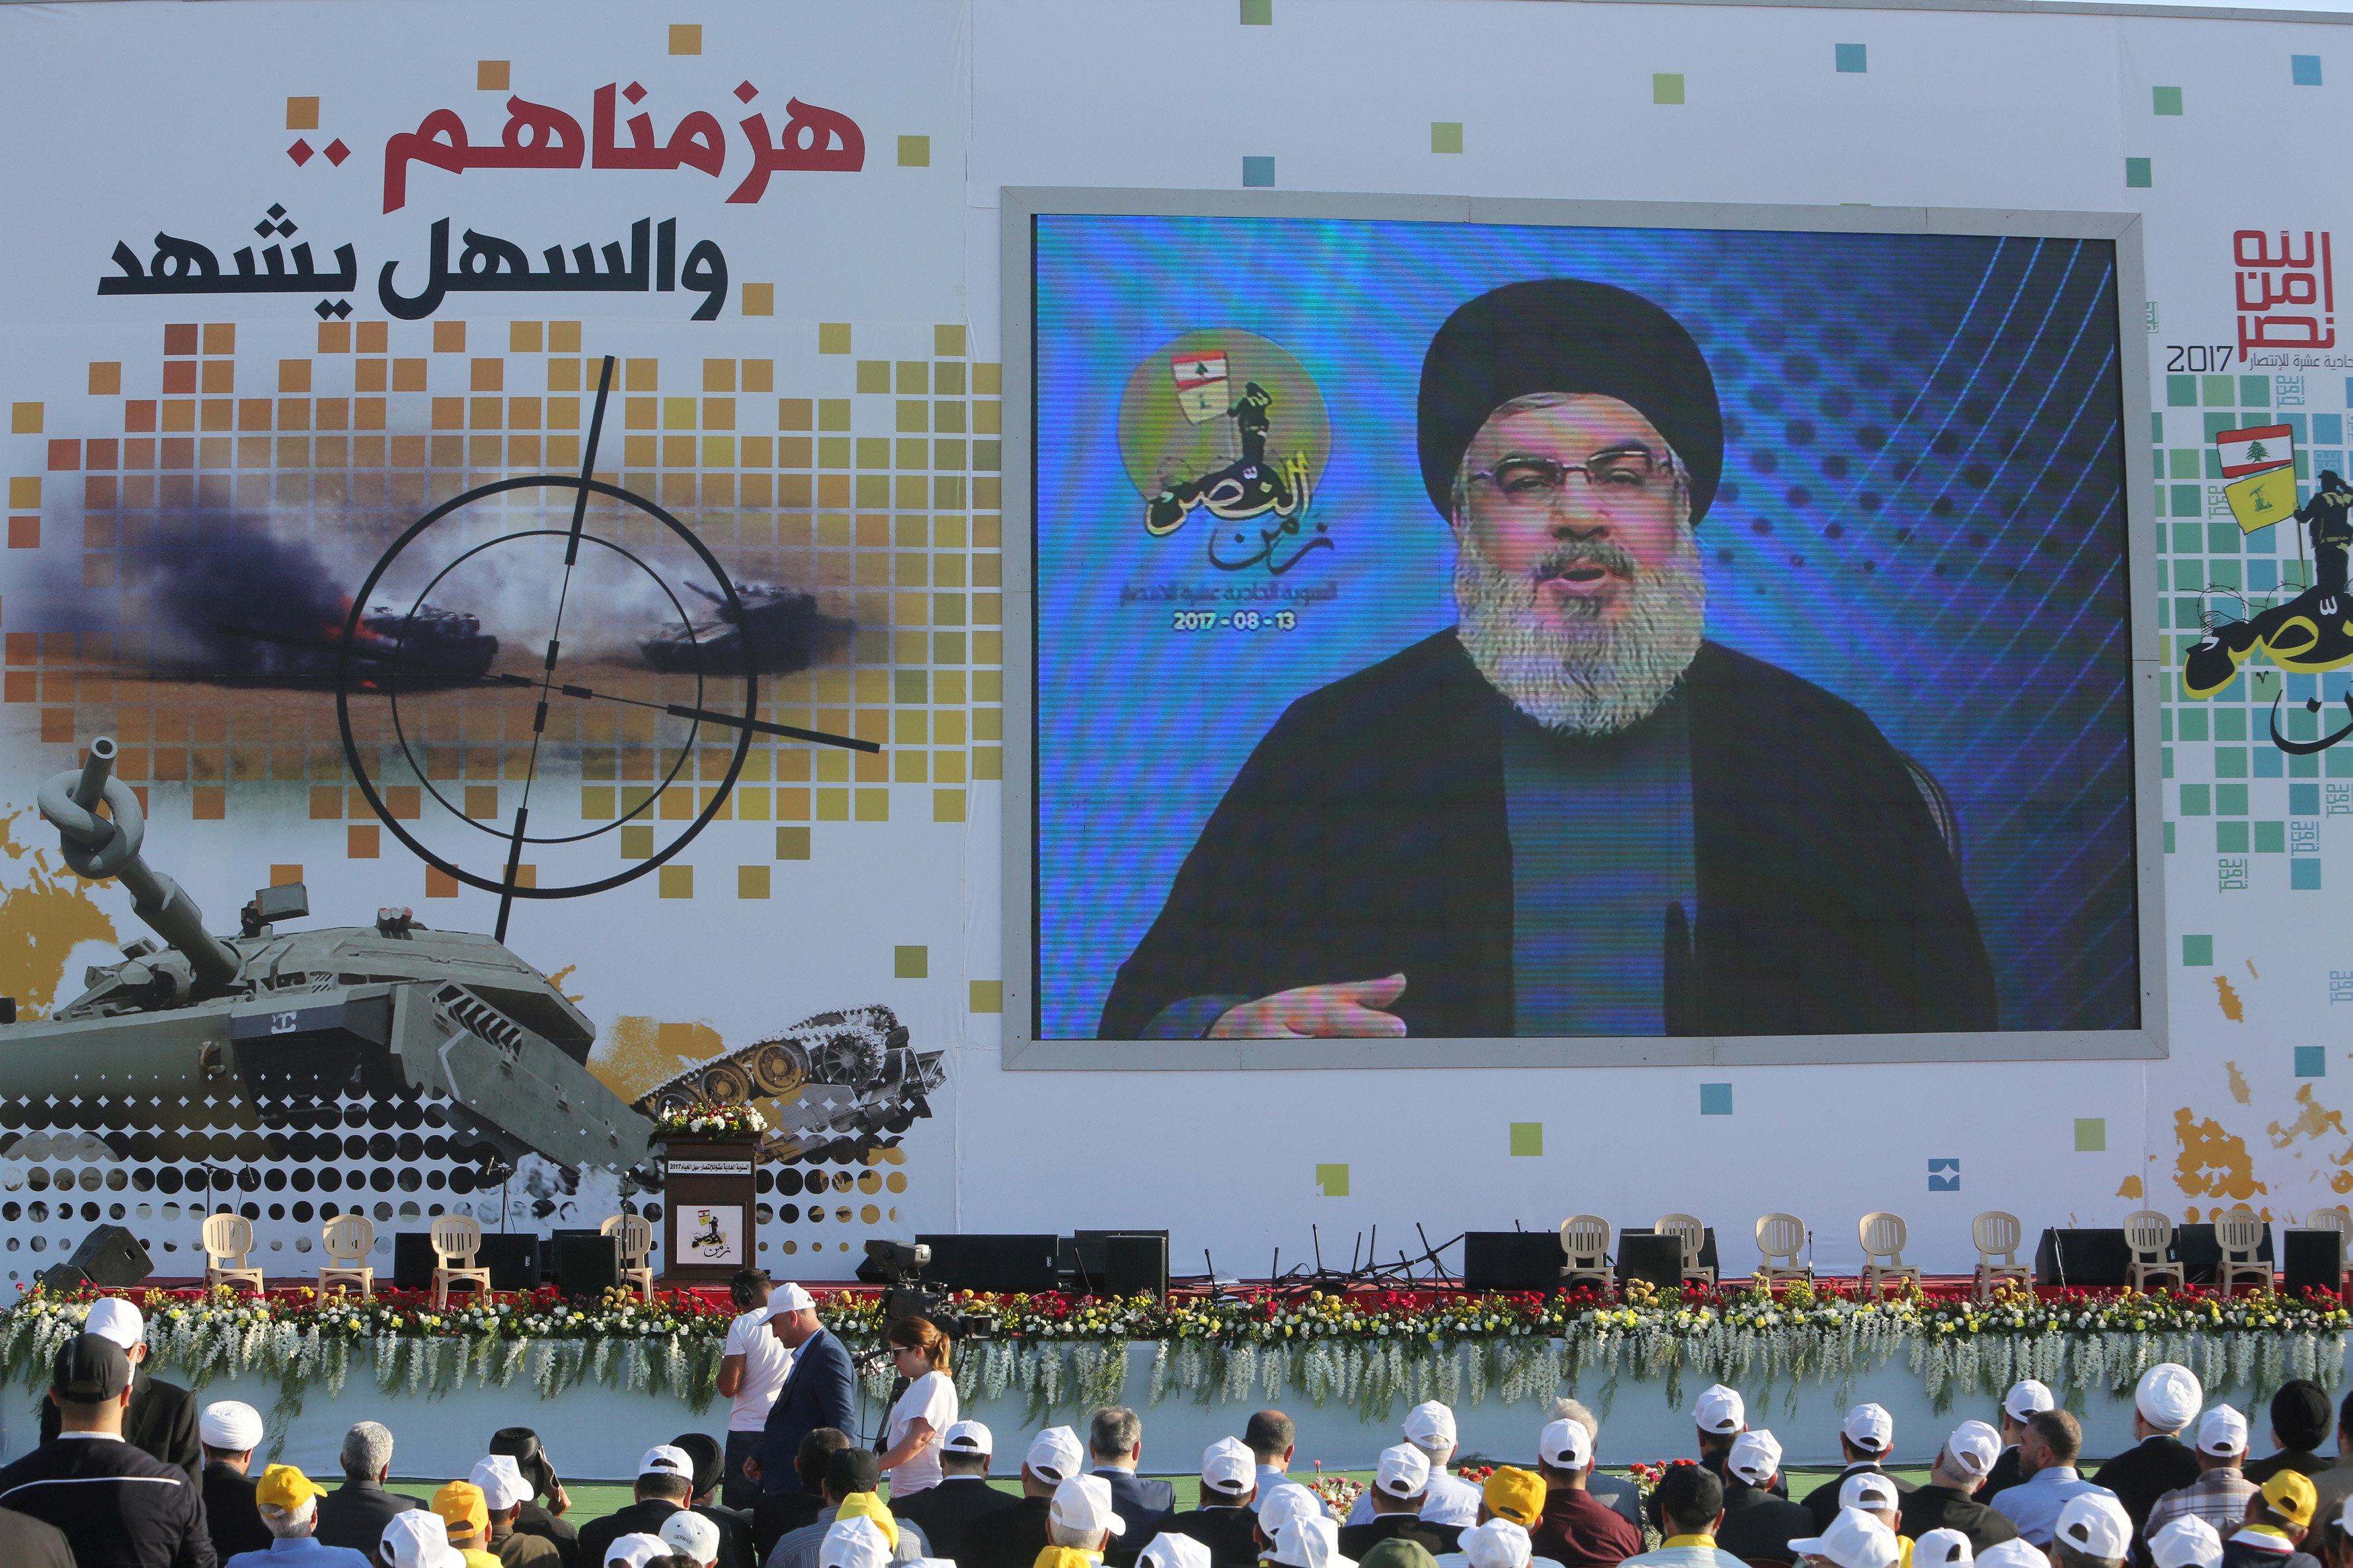 Lebanon's Hezbollah says U.S. can't hurt it, dismisses sanctions